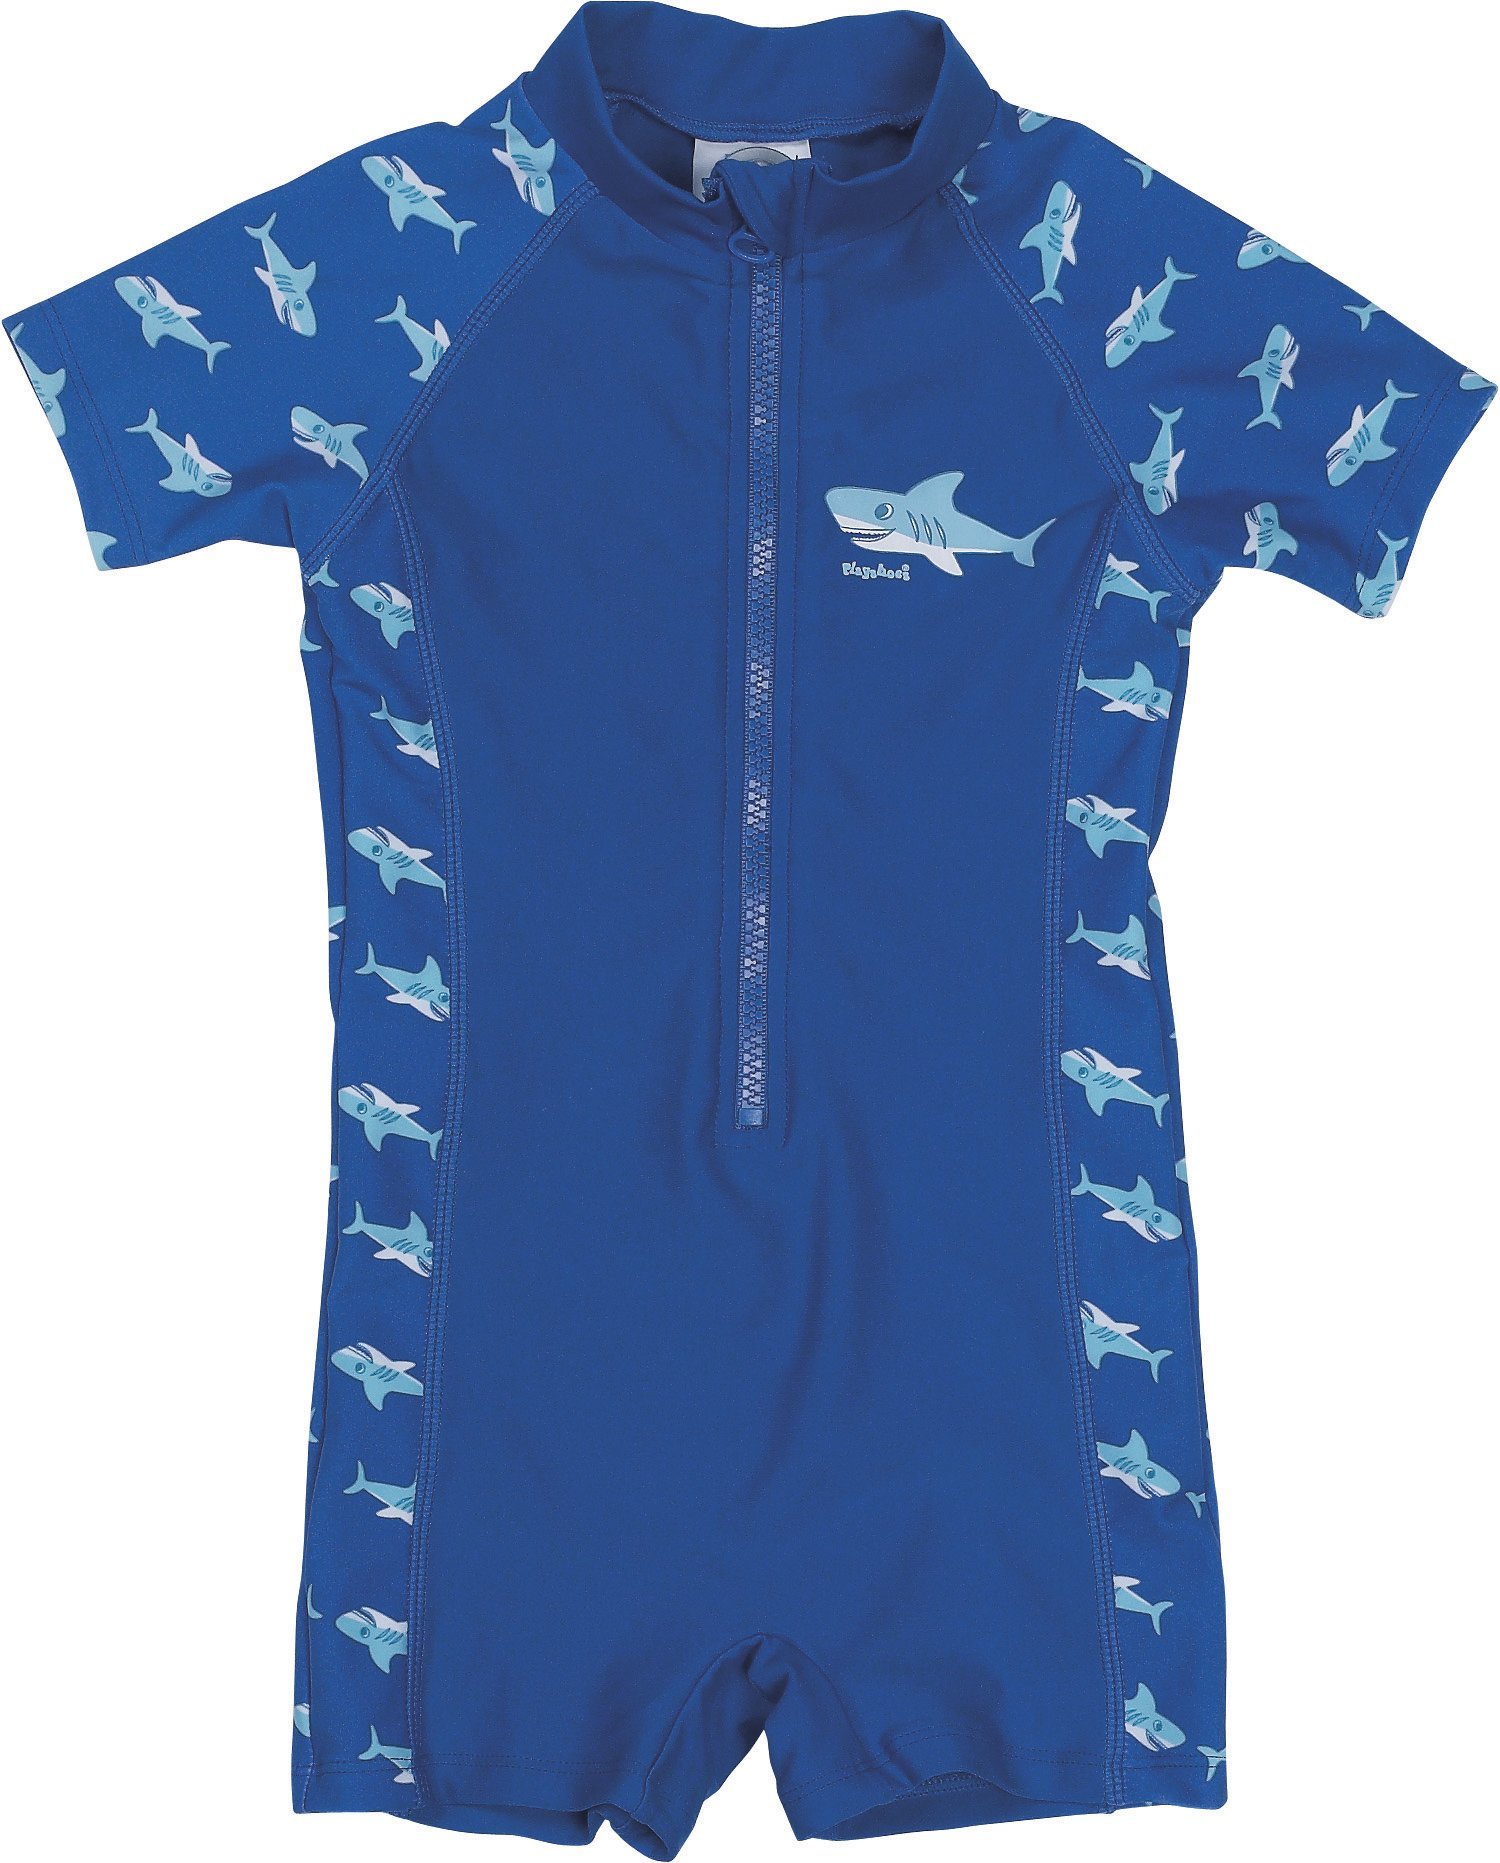 Playshoes - One Piece UV Swimsuit Kids- Shark